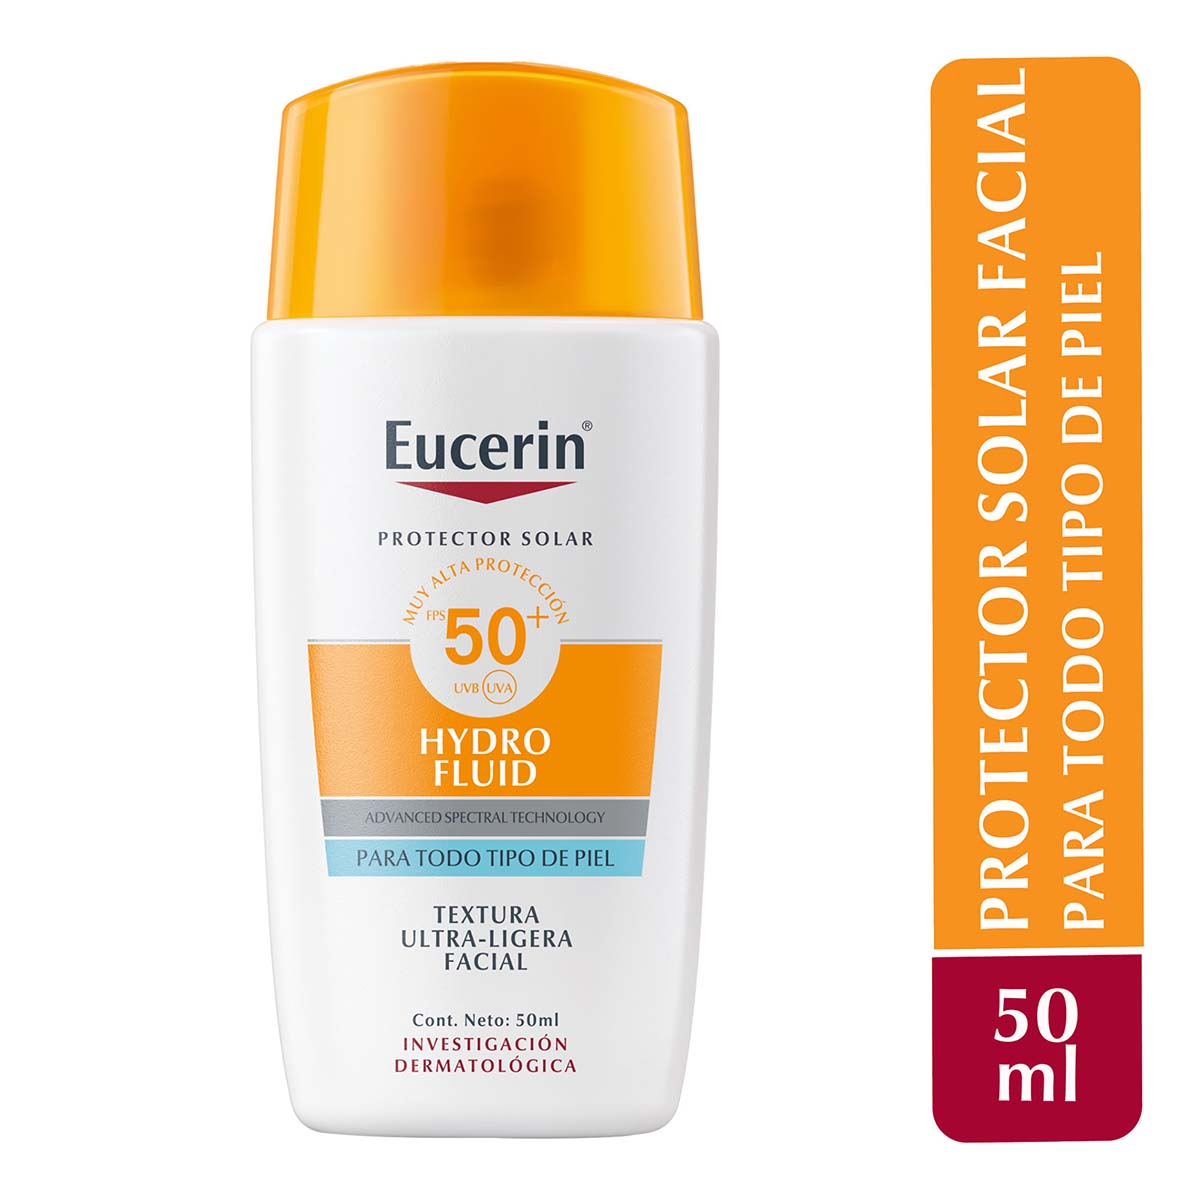 Eucerin sun face hydro-fluid protector solar facial ultra-ligero SPF 50+ 50ml.